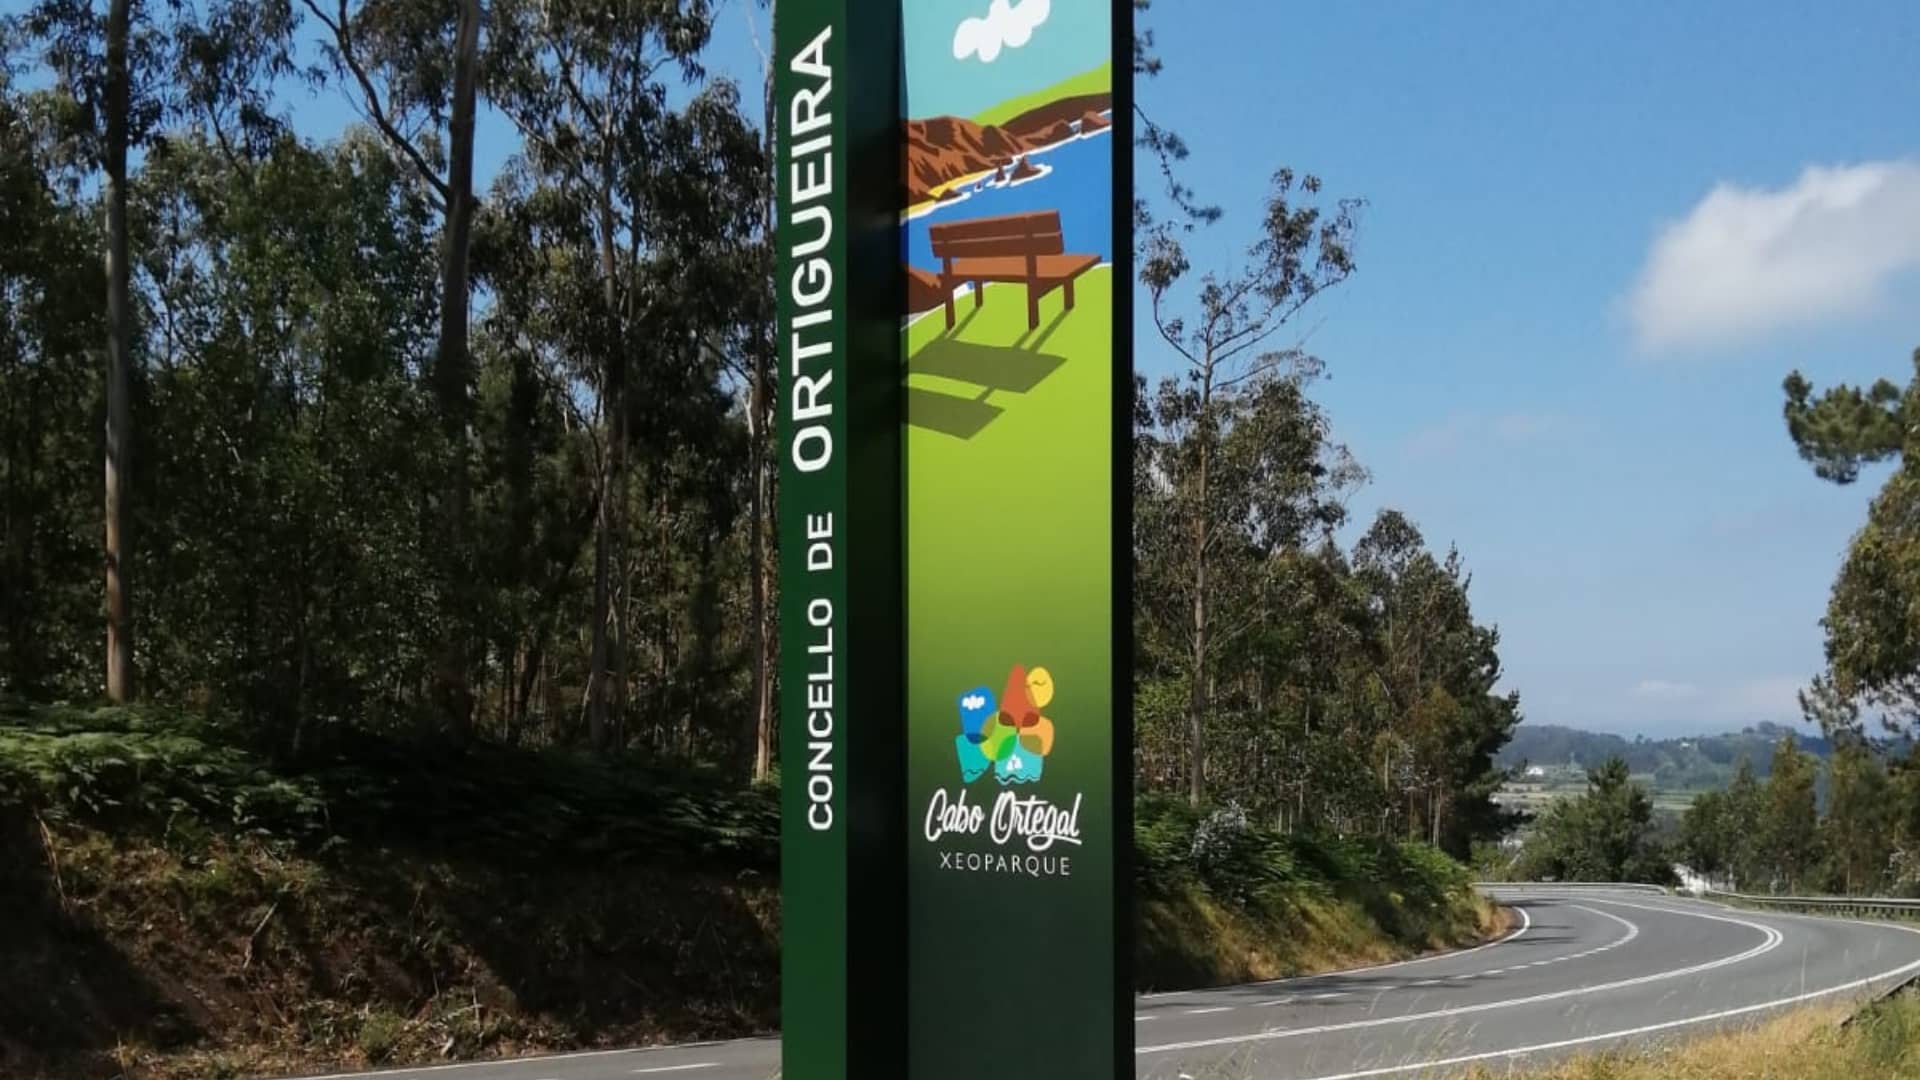 El nuevo cartel de bienvenida a Ortigueira  | CONCELLO DE ORTIGUEIRA